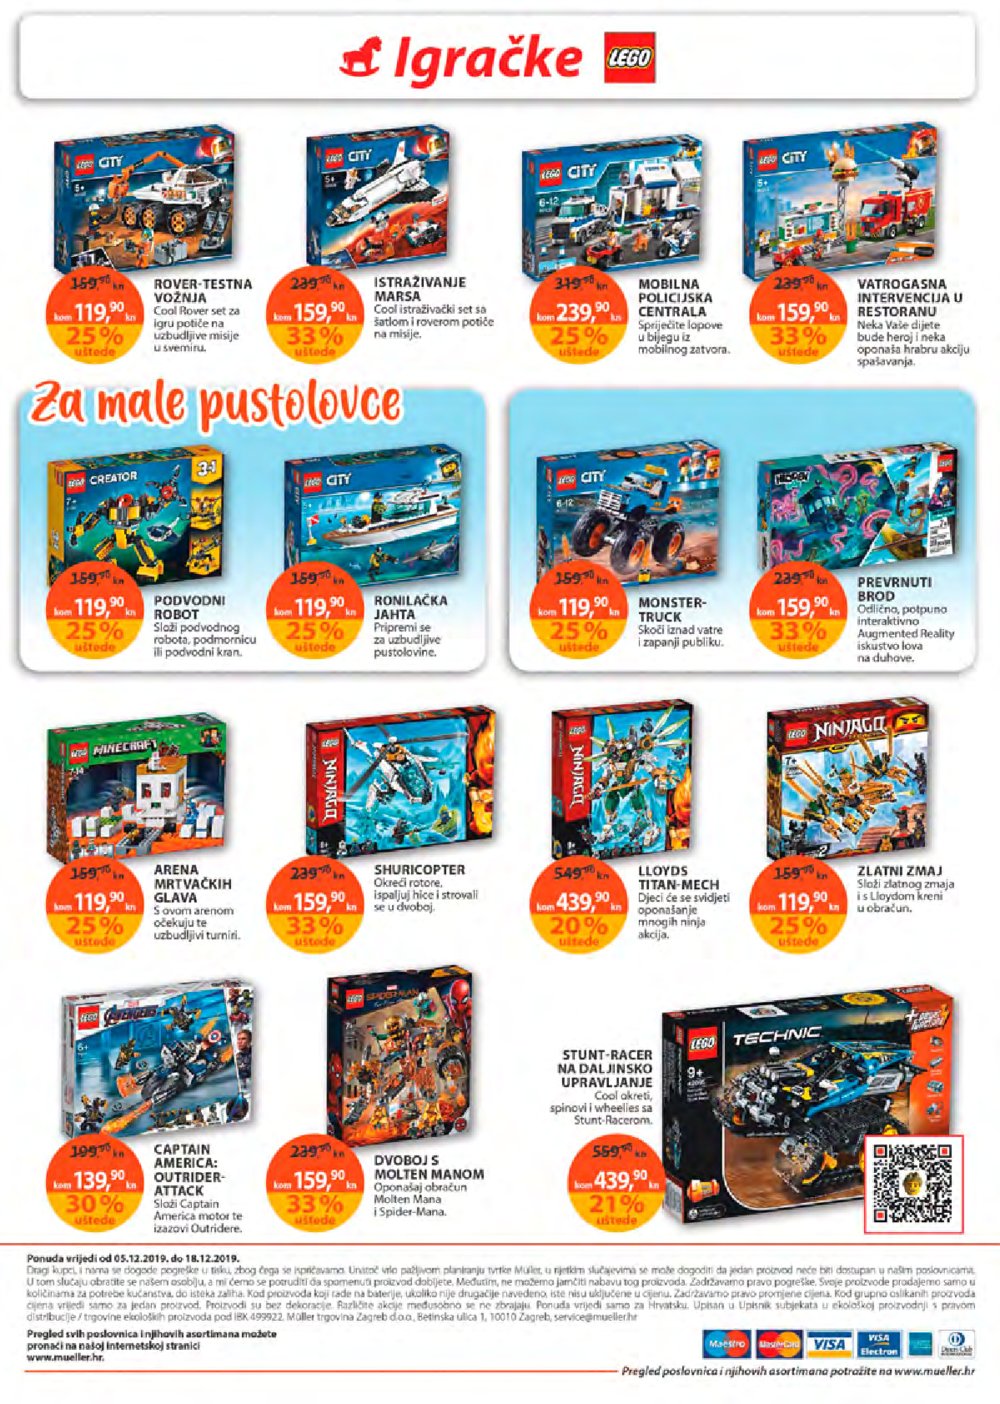 Muller katalog Akcija igračaka 5.12.-18.12.2019.